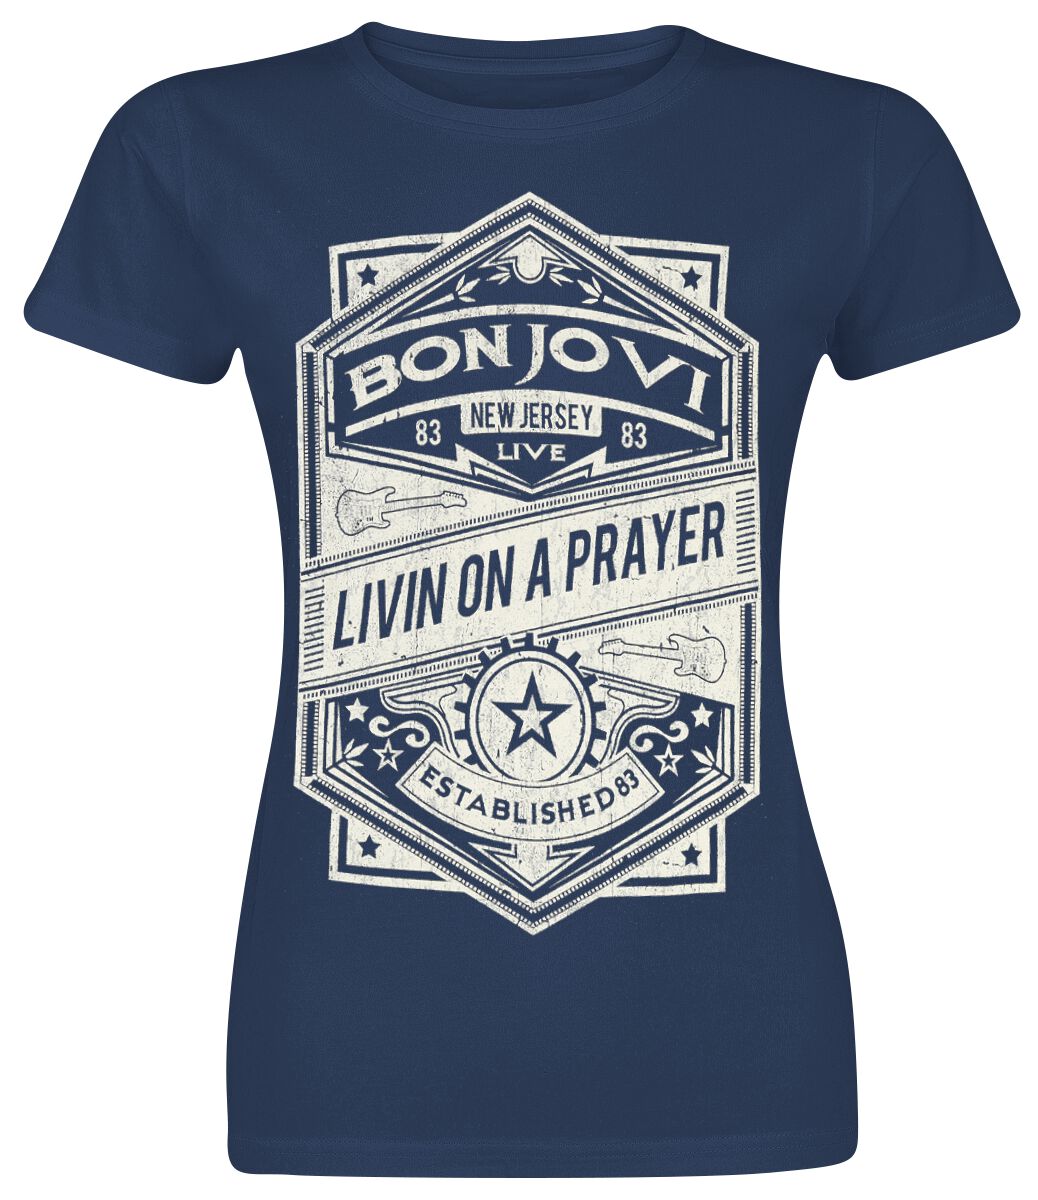 Offizielles Merchandise bei EMP - Bon Jovi Living On A Prayer T-Shirt für Damen in den Größen XXL verfügbar. Farbe: dunkelblau, Muster: Meliert, Hauptmaterial: 100% Baumwolle, Passform: Regular, Ärmellänge: Kurzer Ärmel, Ausschnitt: Rundhals, Kragenform: Kragenlos. - 0